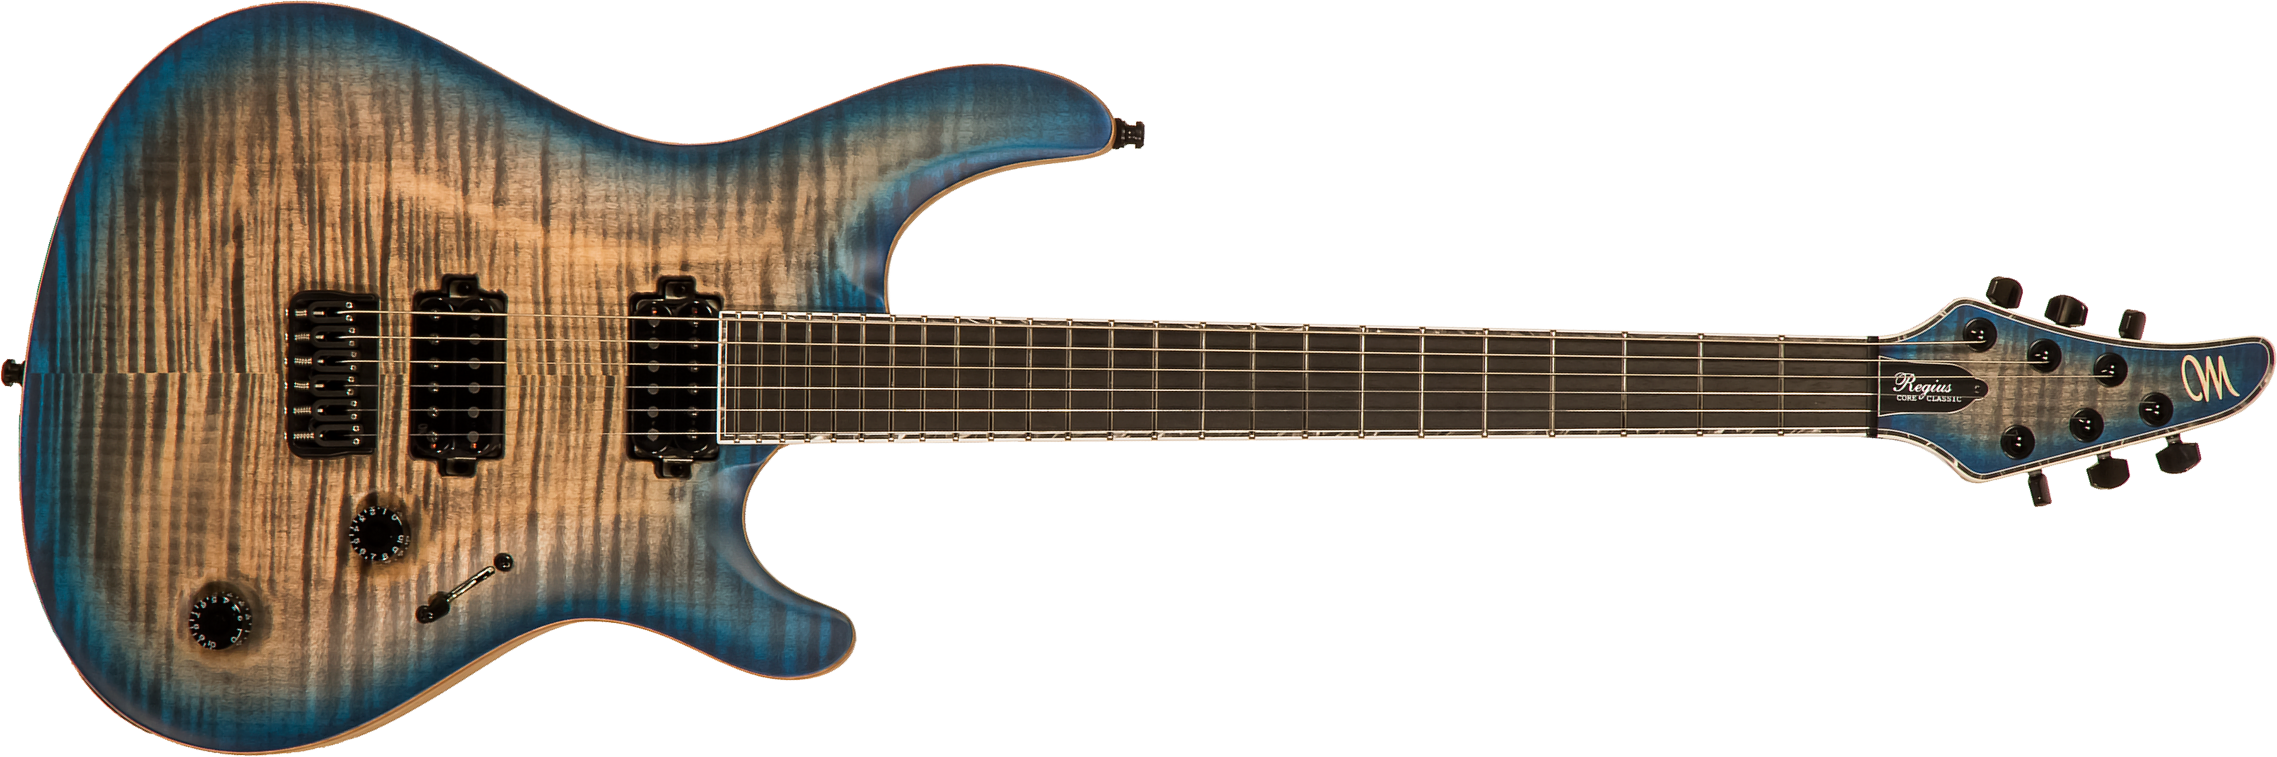 Mayones Guitars Regius Core Classic 6 Ash 2h Tko Eb #rf2204447 - Jean Black 2-tone Blue Sunburst Satine - Double cut electric guitar - Main picture